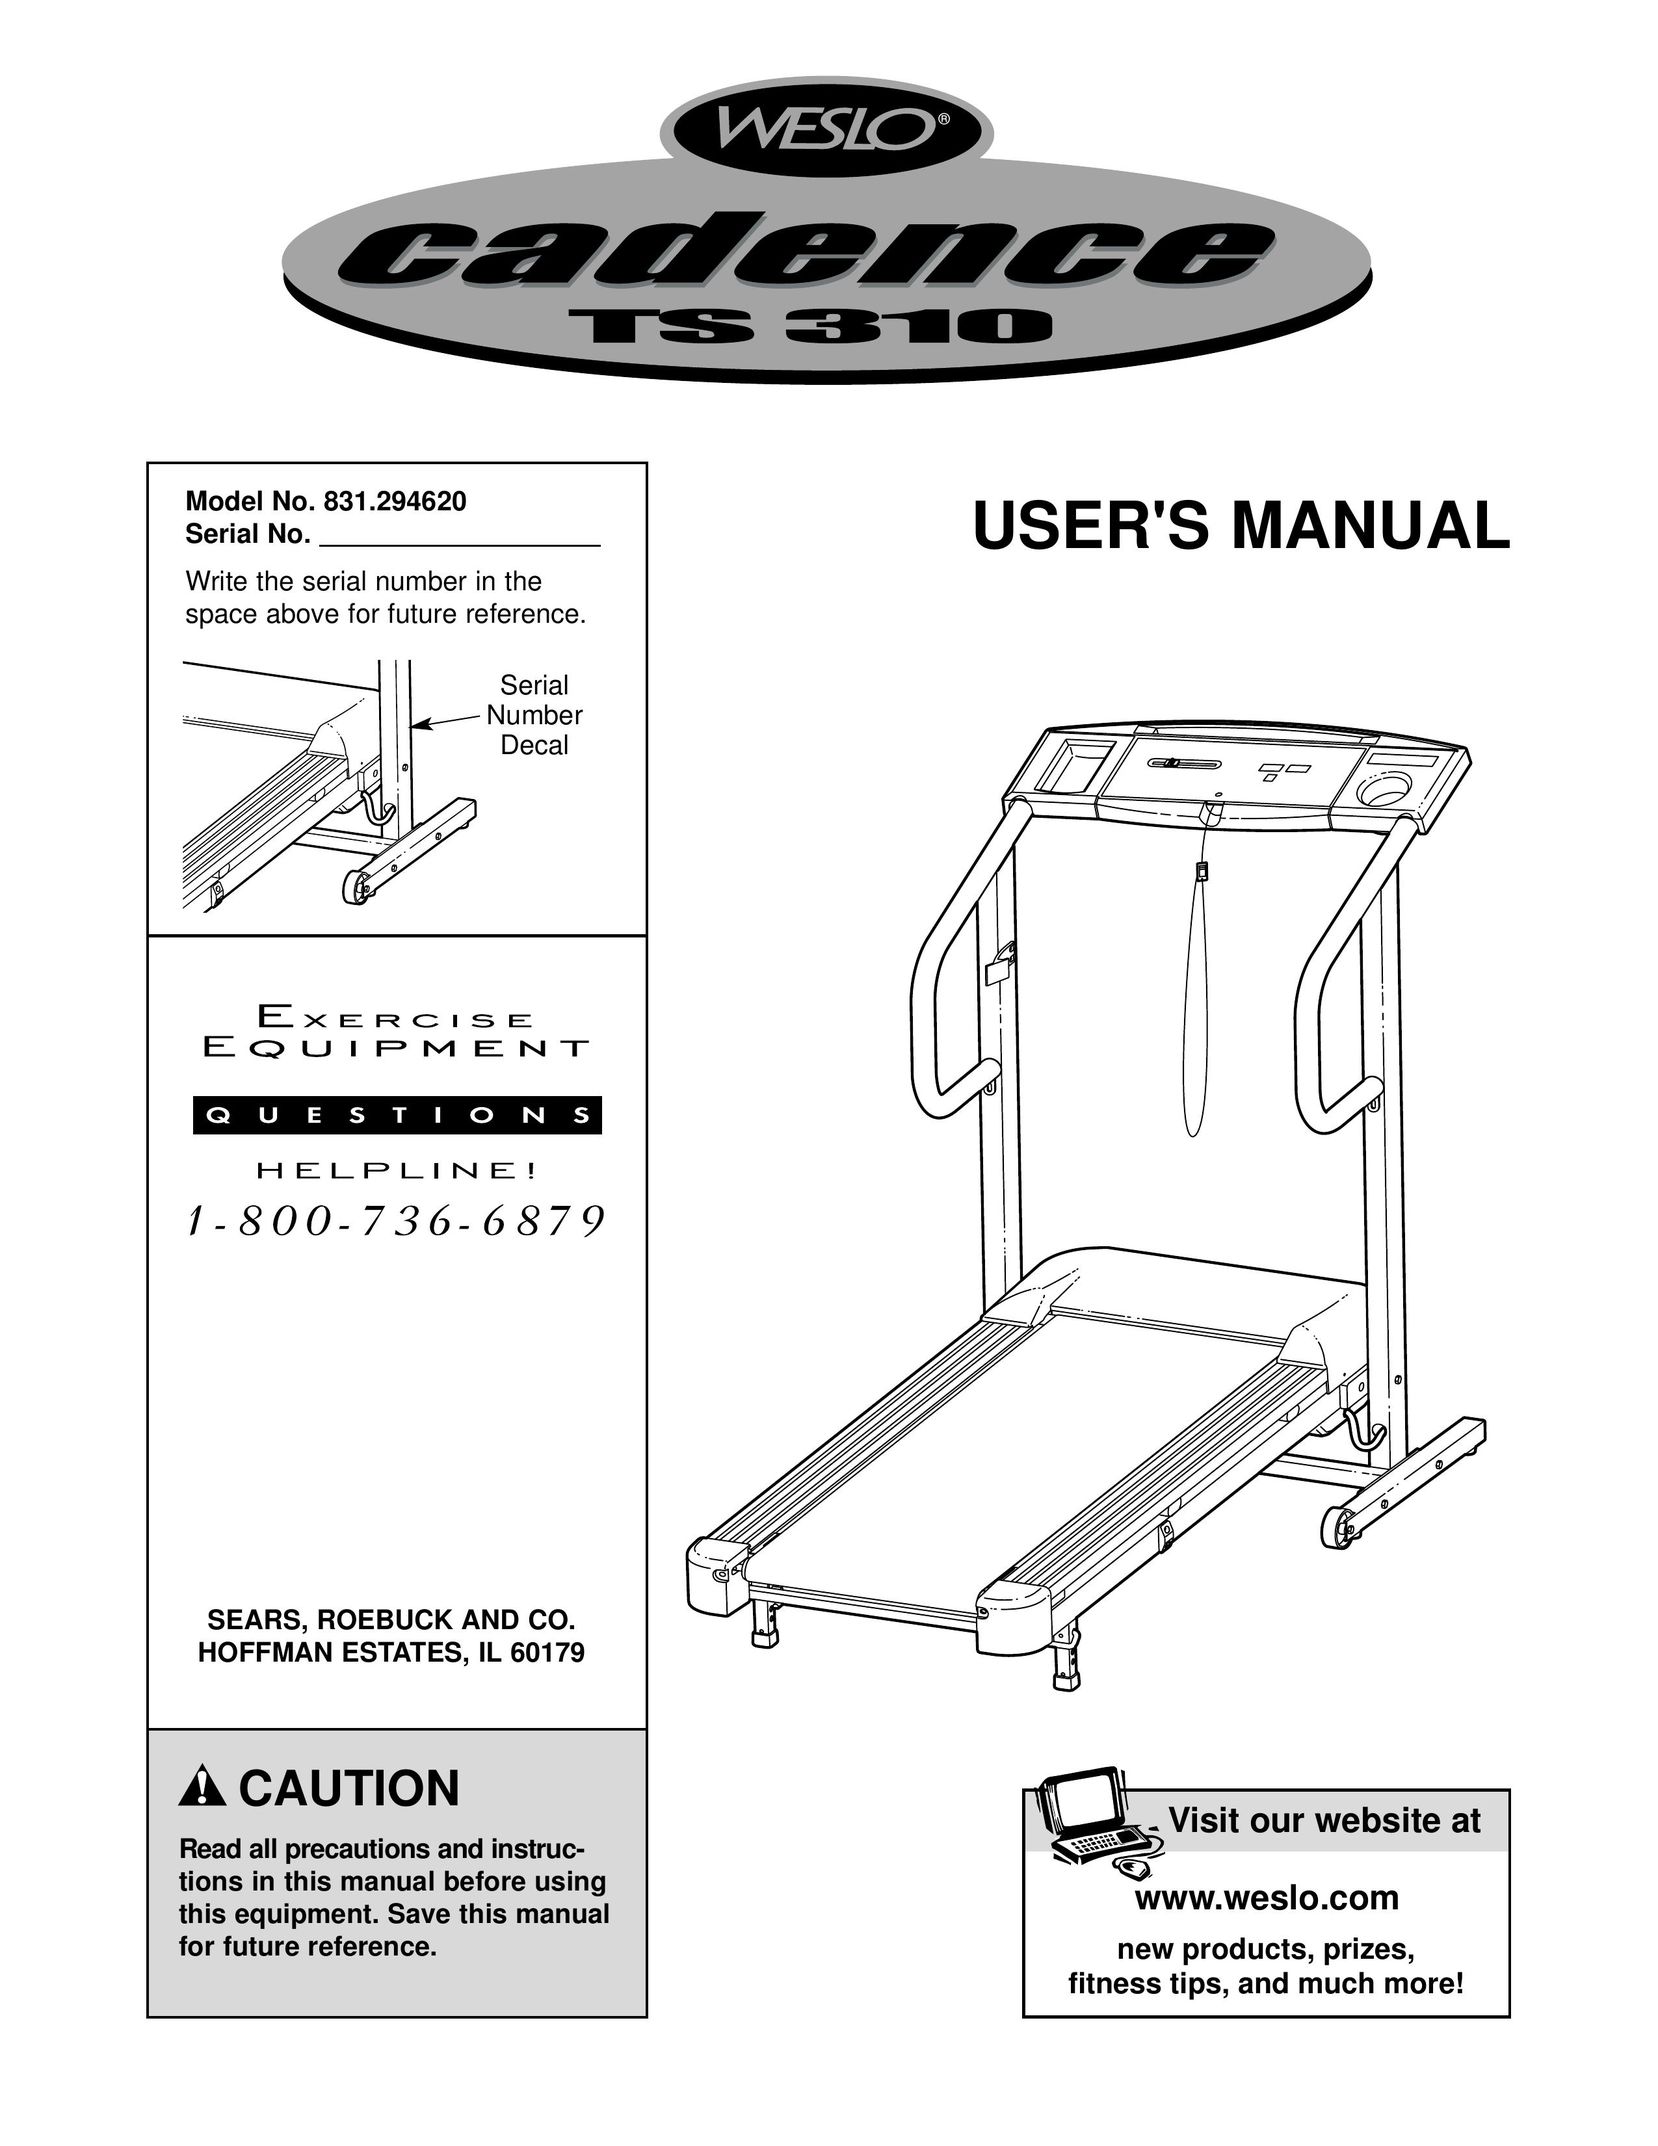 Weslo 831.294620 Treadmill User Manual